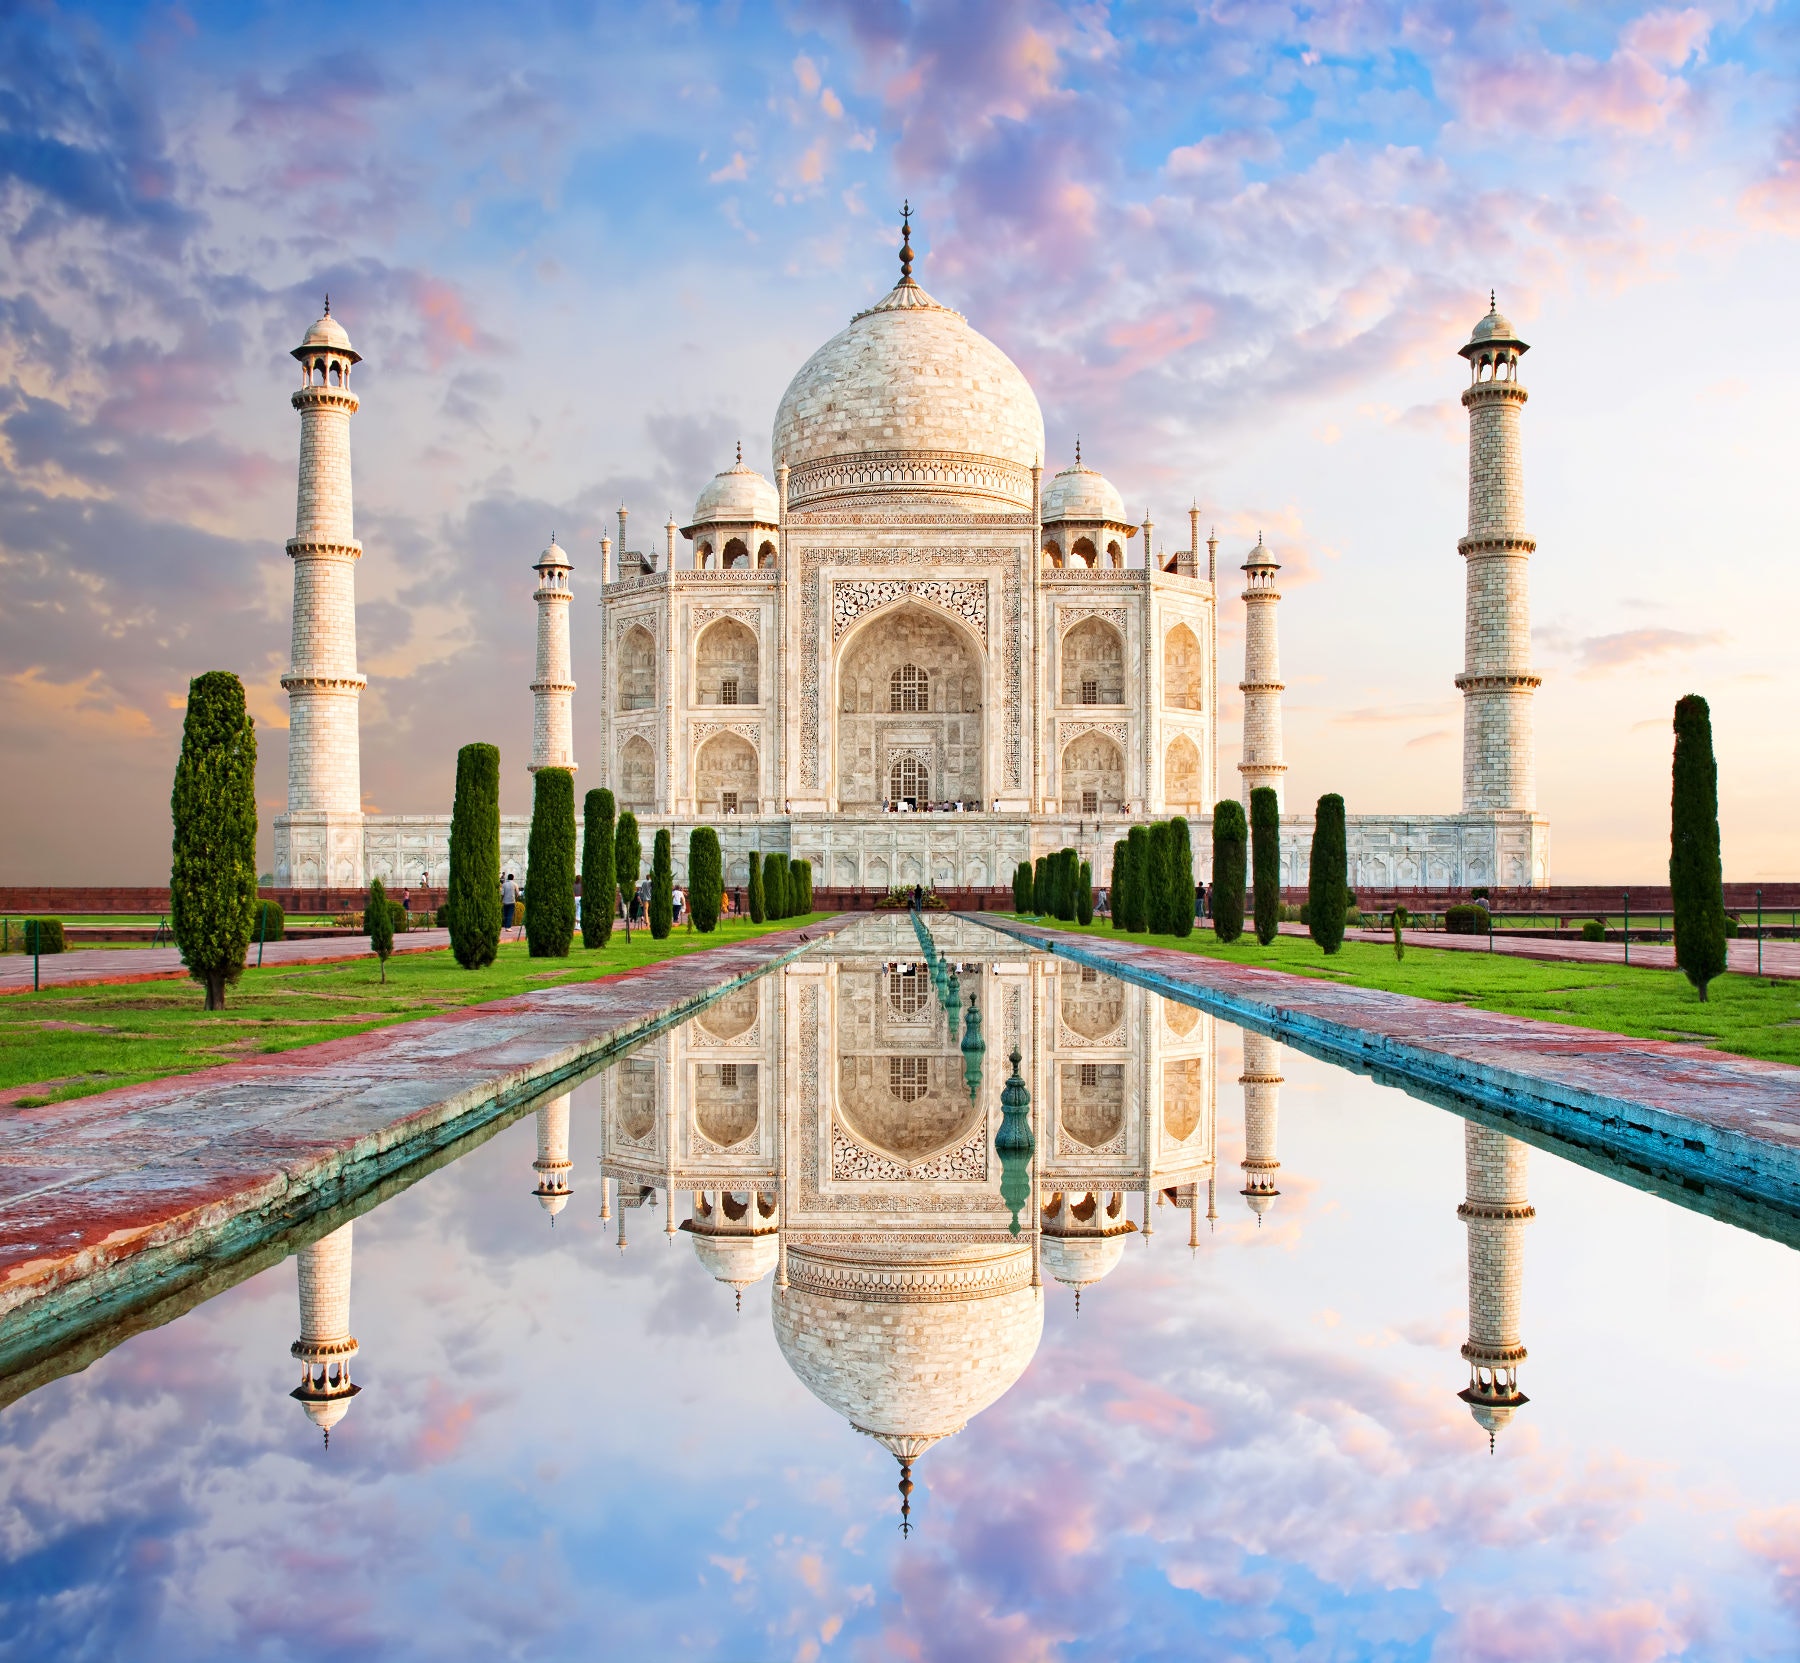 Vizitati Taj Mahal